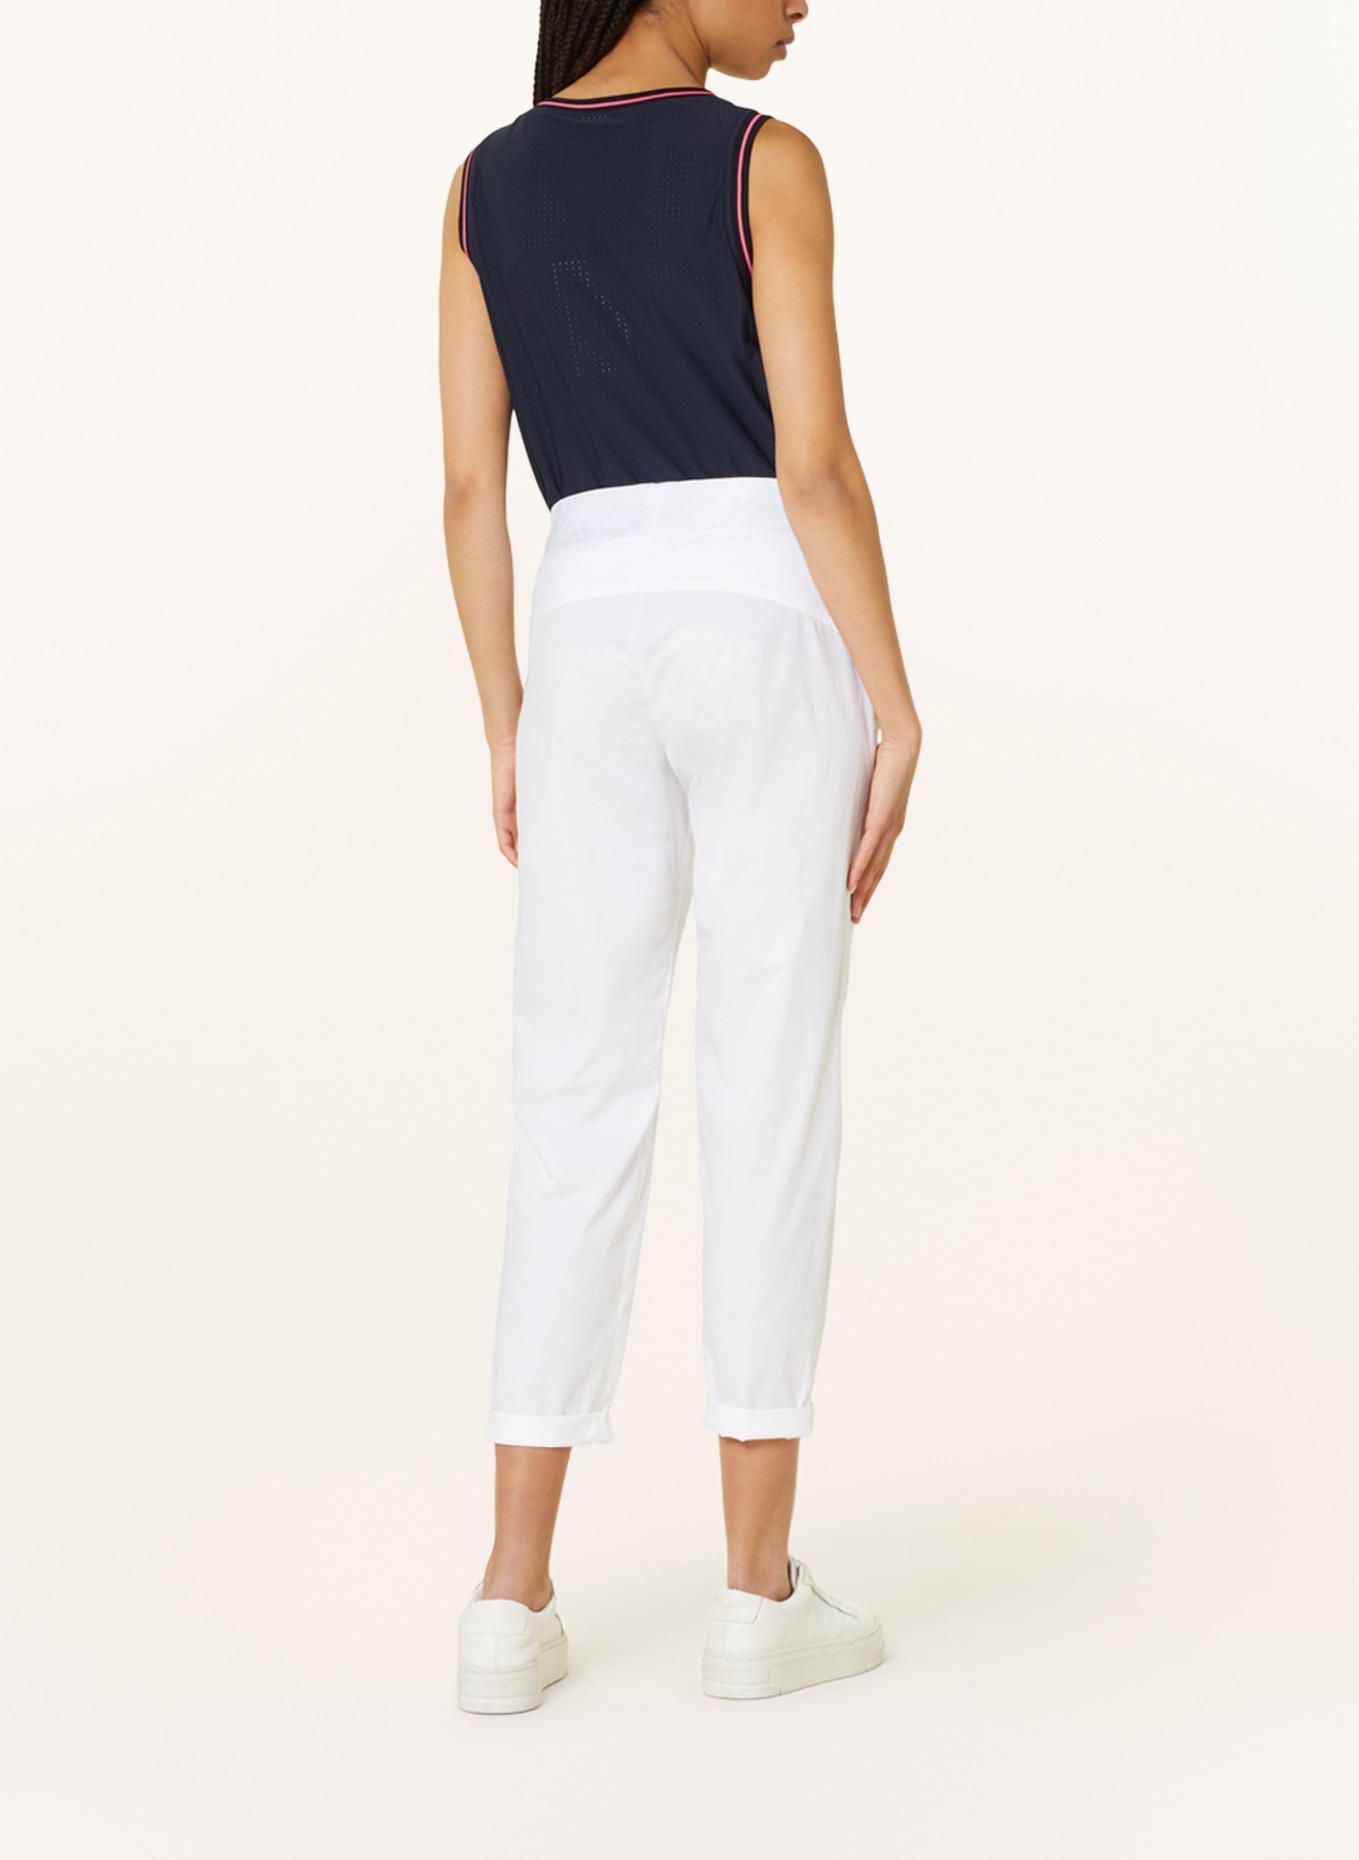 ULLI EHRLICH SPORTALM Pants in jogger style, Color: WHITE (Image 3)